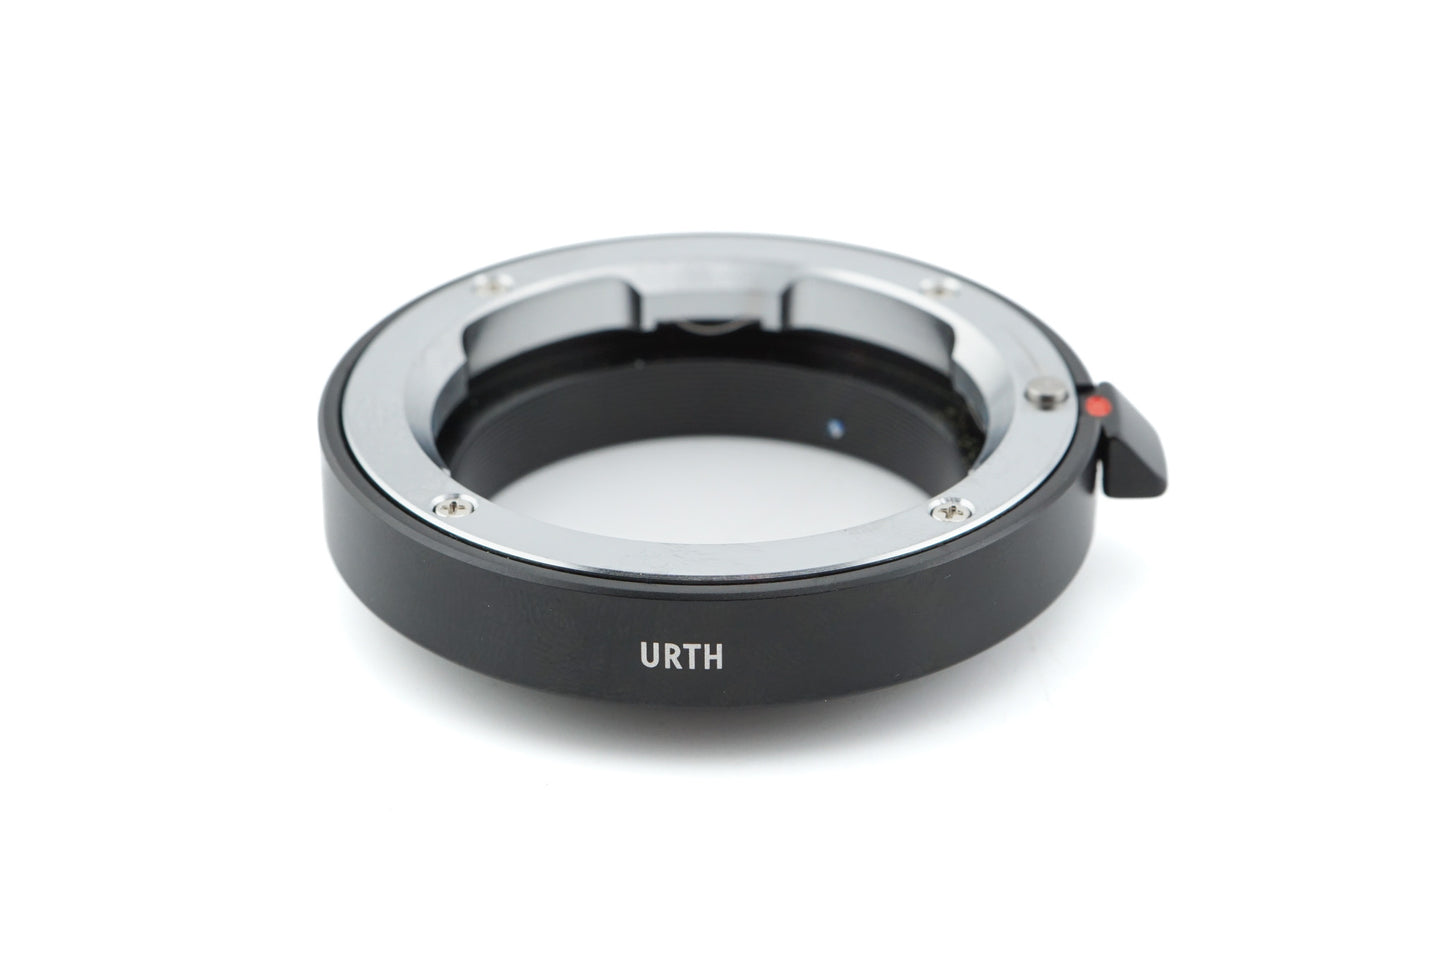 Urth Leica M - Fuji X (M-X) Adapter - Lens Adapter